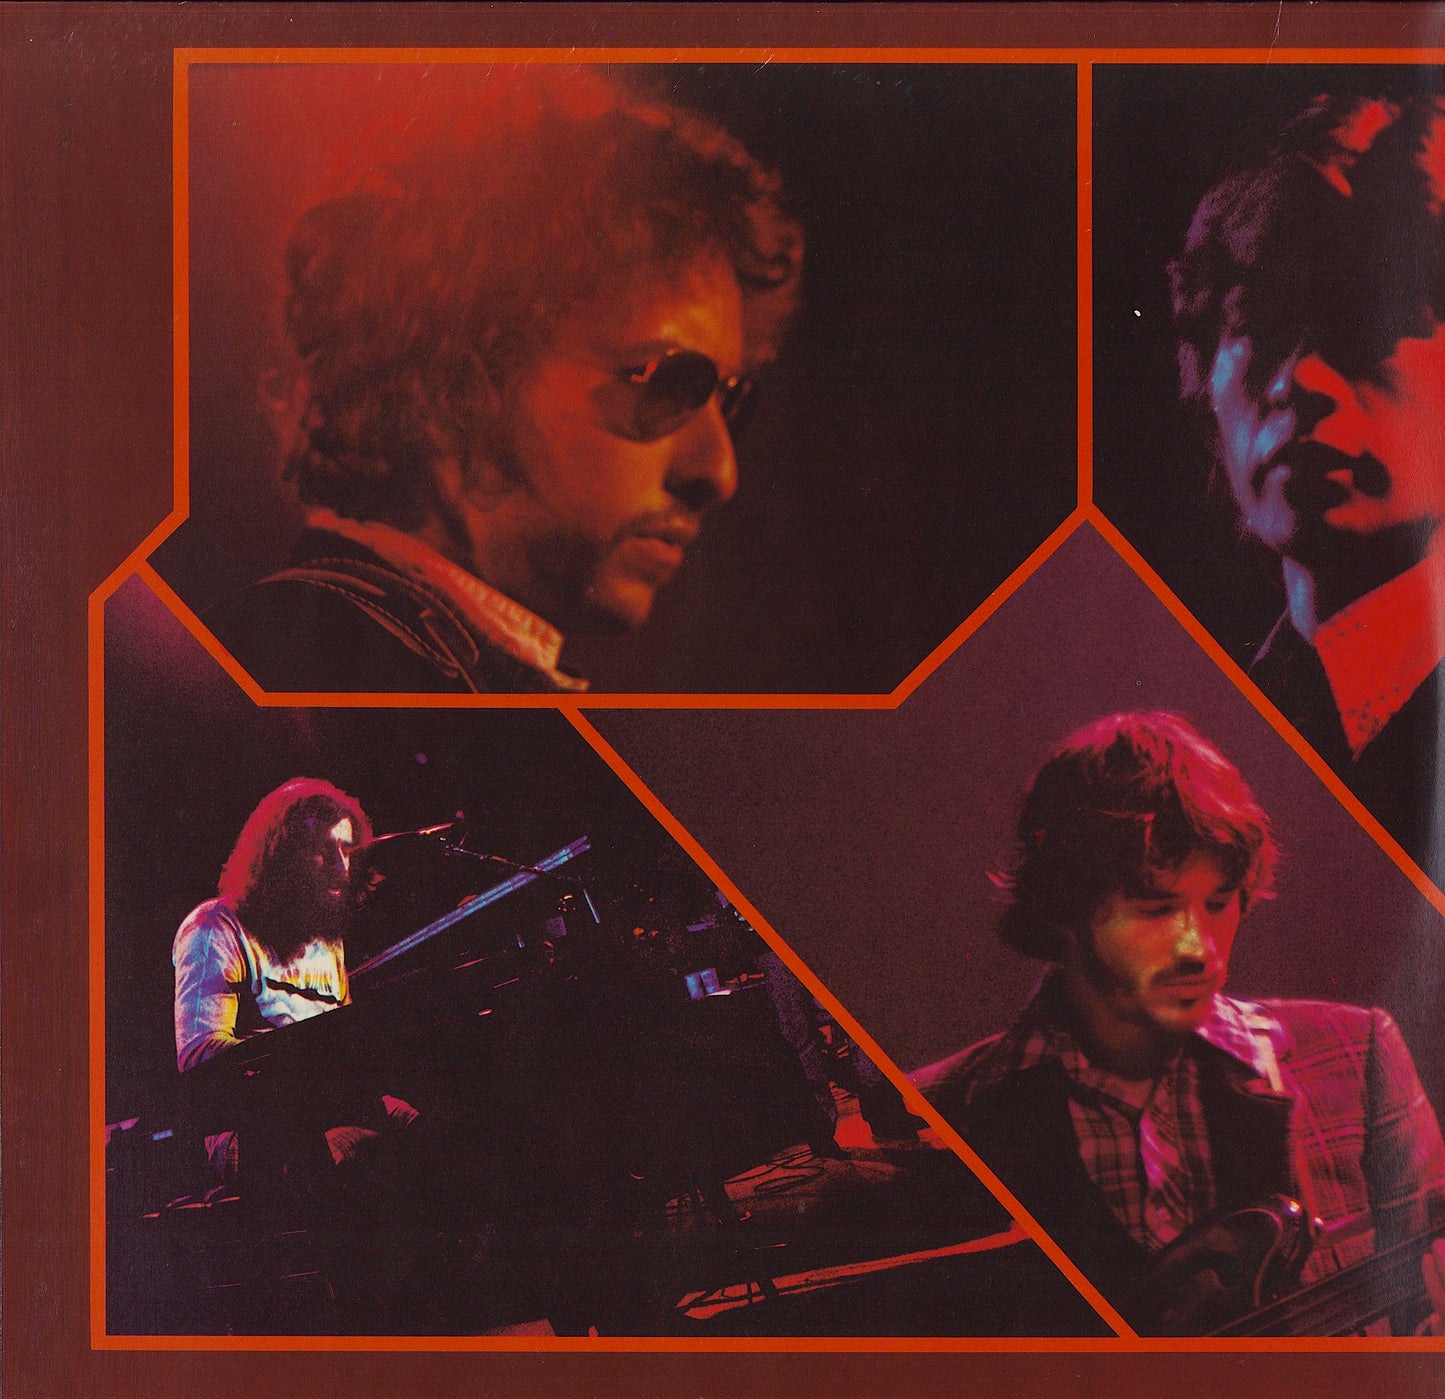 Bob Dylan / The Band ‎- Before The Flood Vinyl 2LP